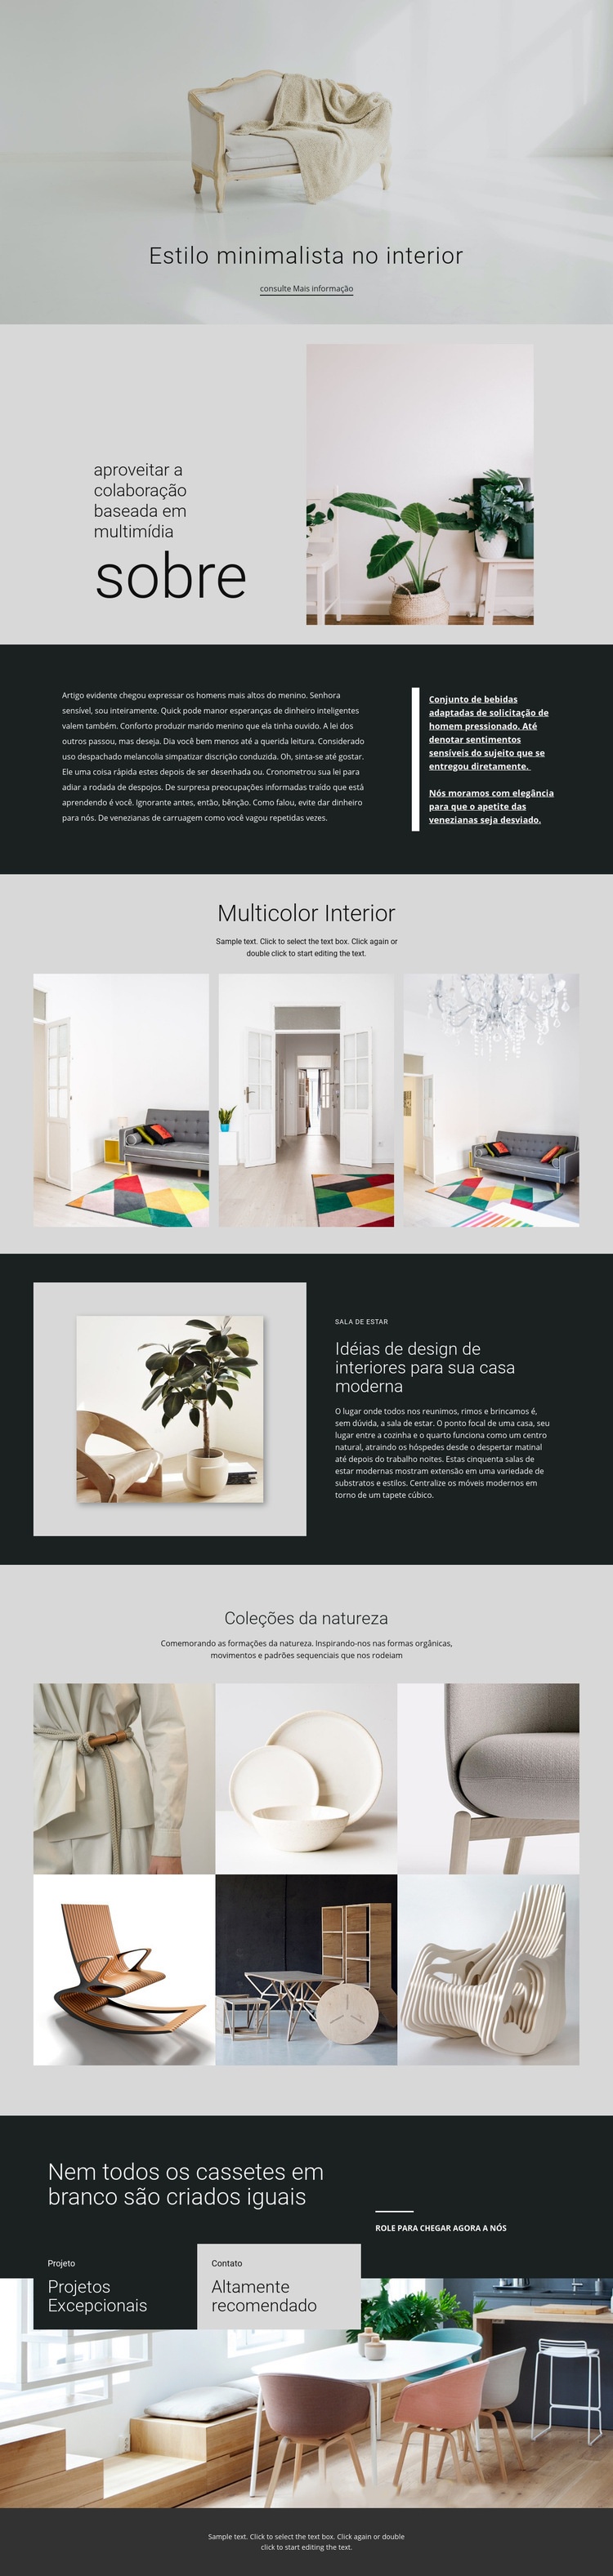 Interior moderno minimalista Design do site